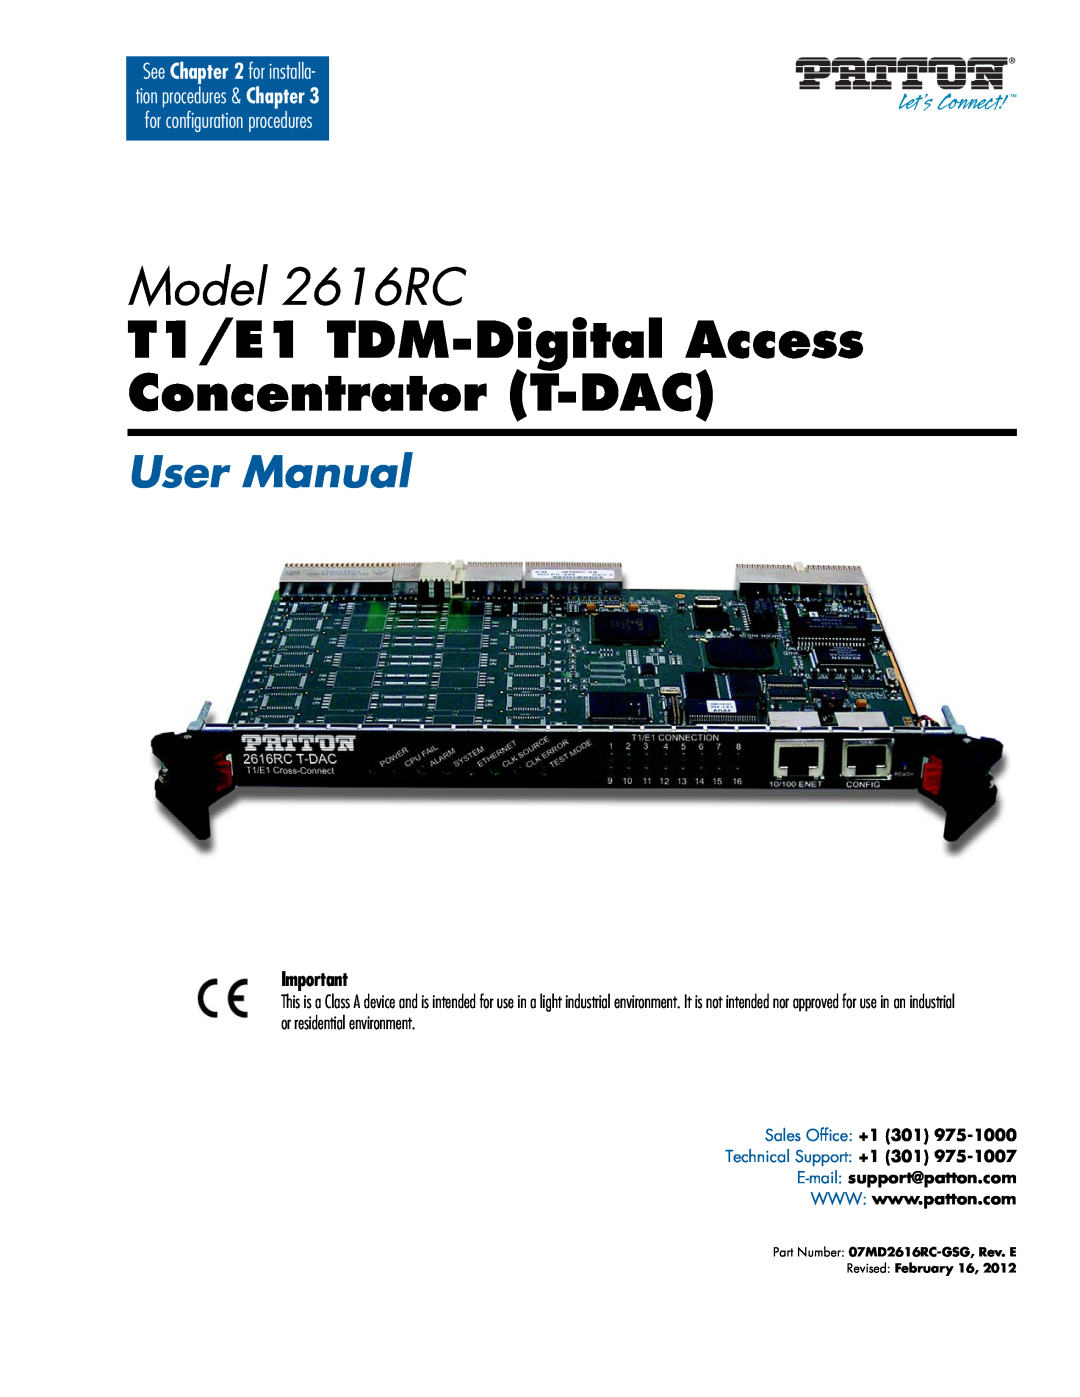 Patton electronic user manual Model 2616RC, T1/E1 TDM-Digital Access Concentrator T-DAC, User Manual 